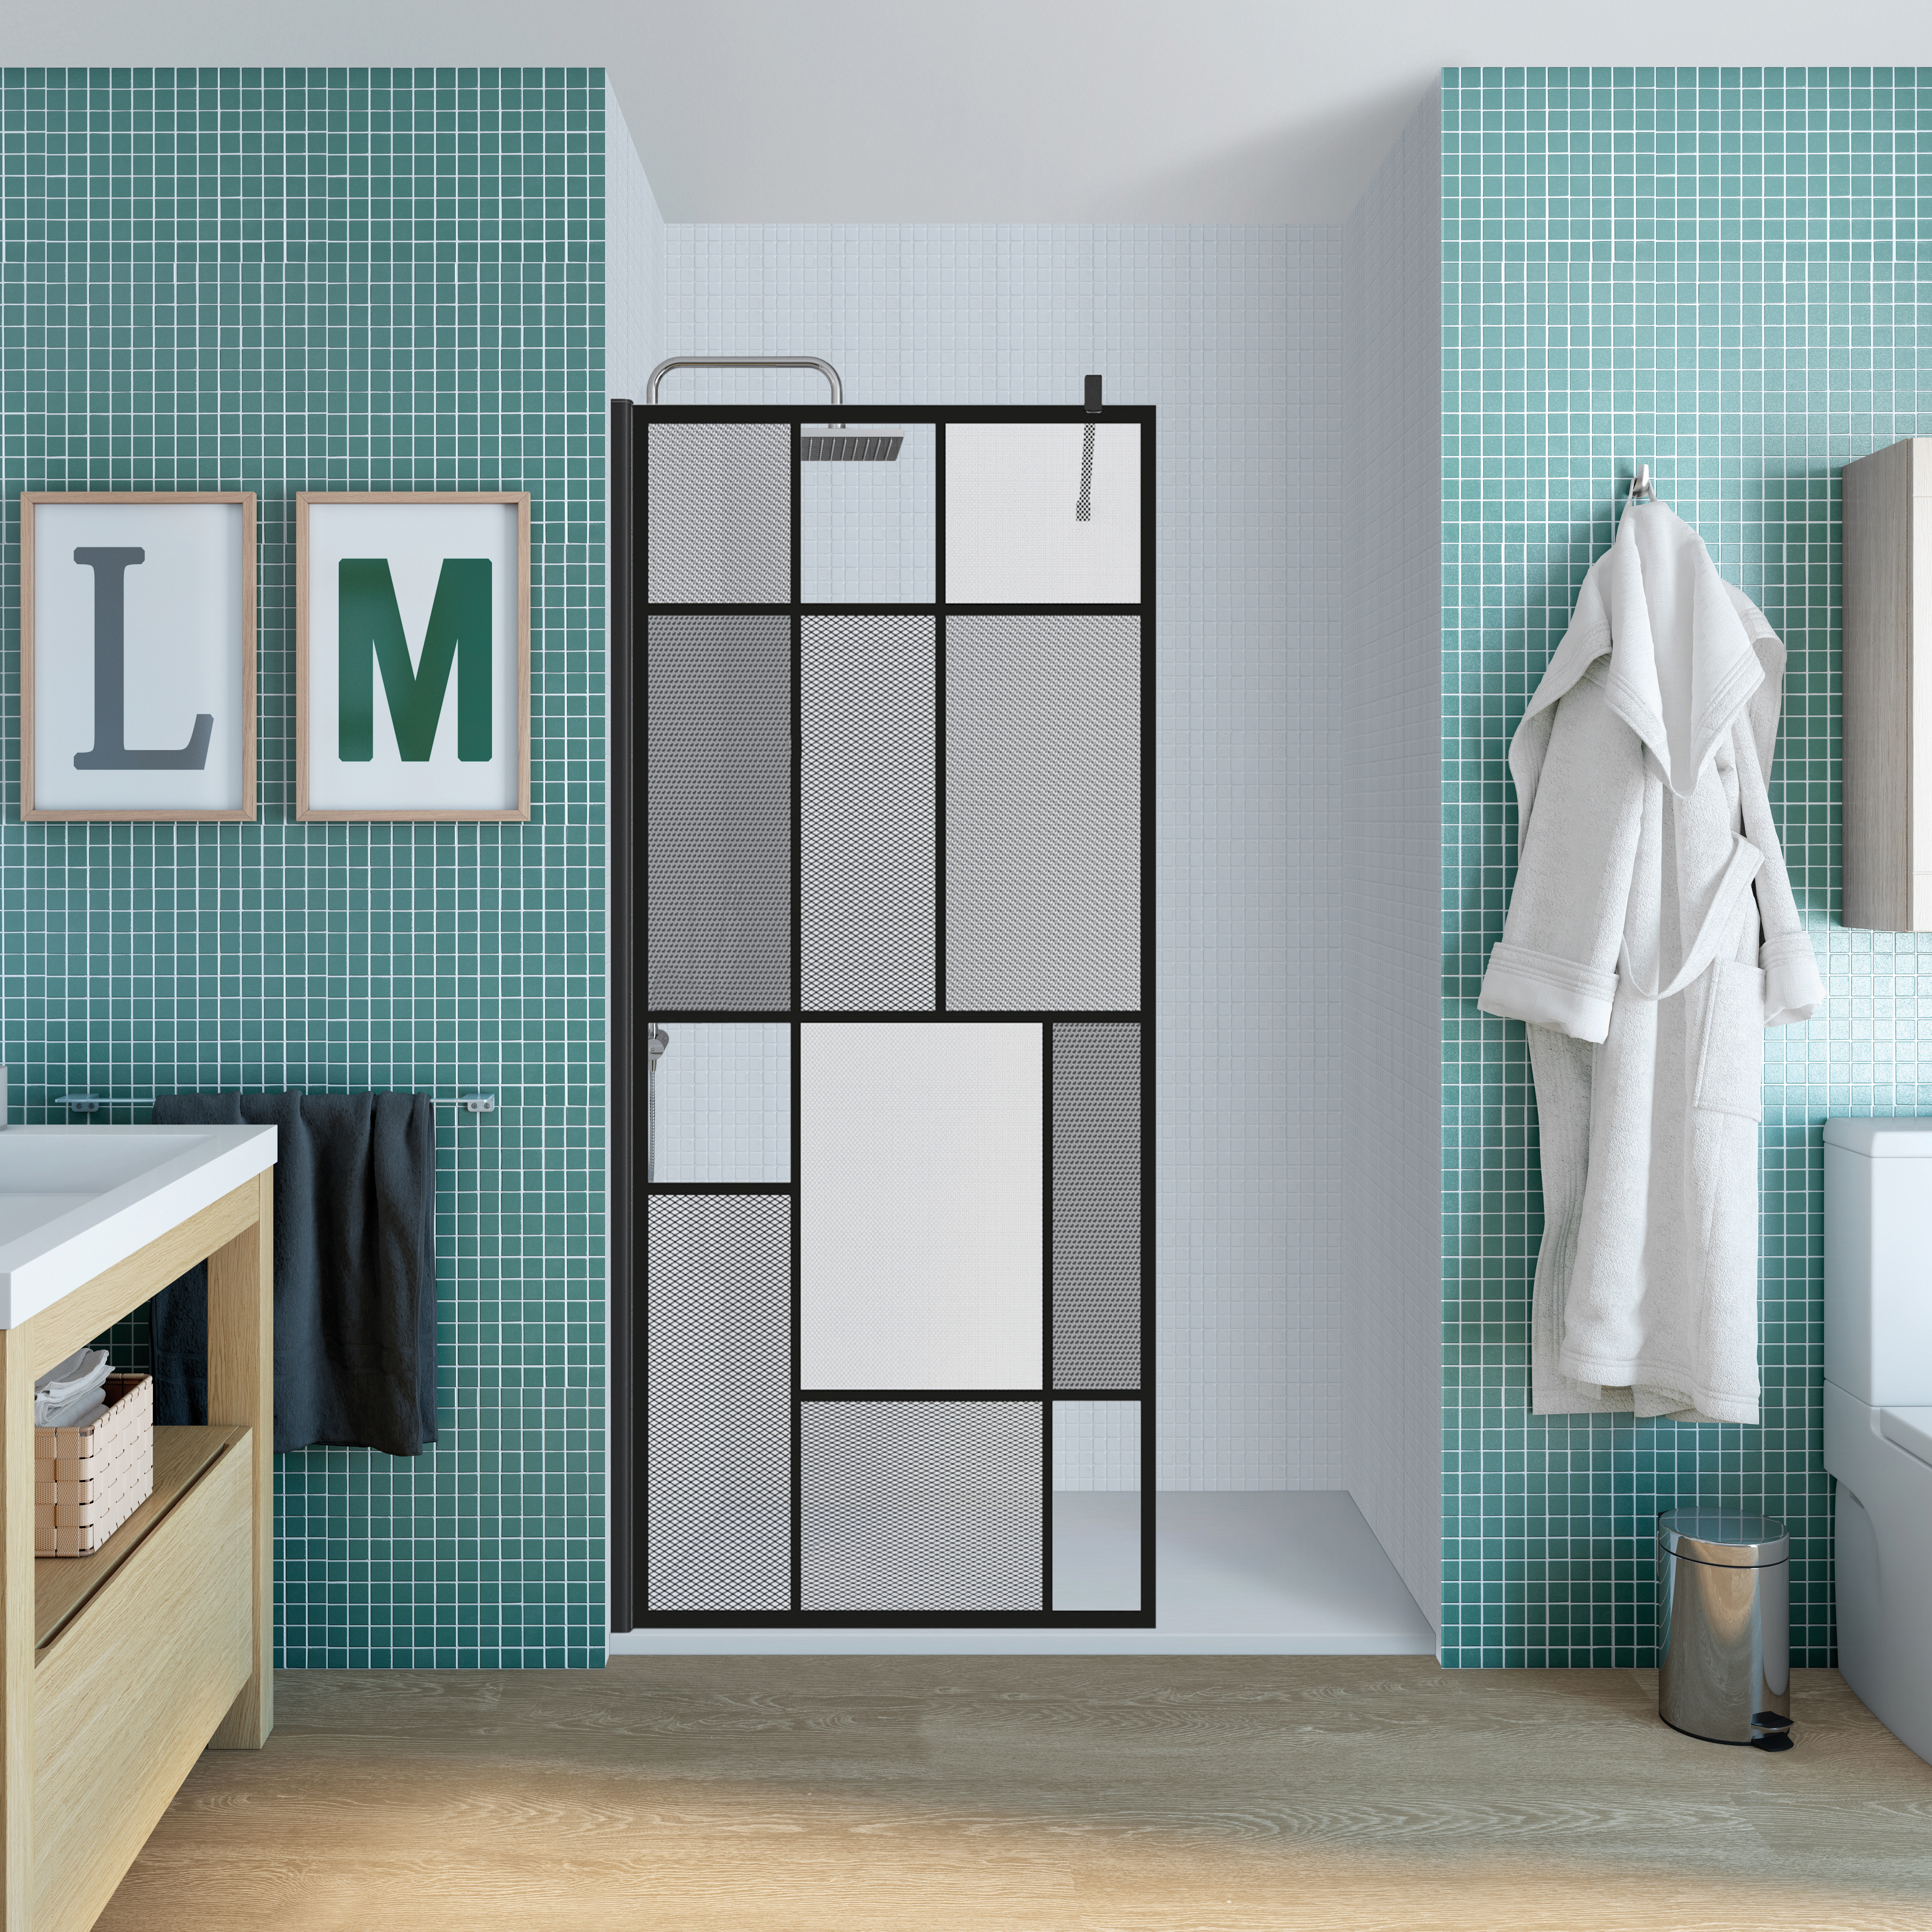 Panel de ducha cool serigrafiado perfil cromado 120x200cm